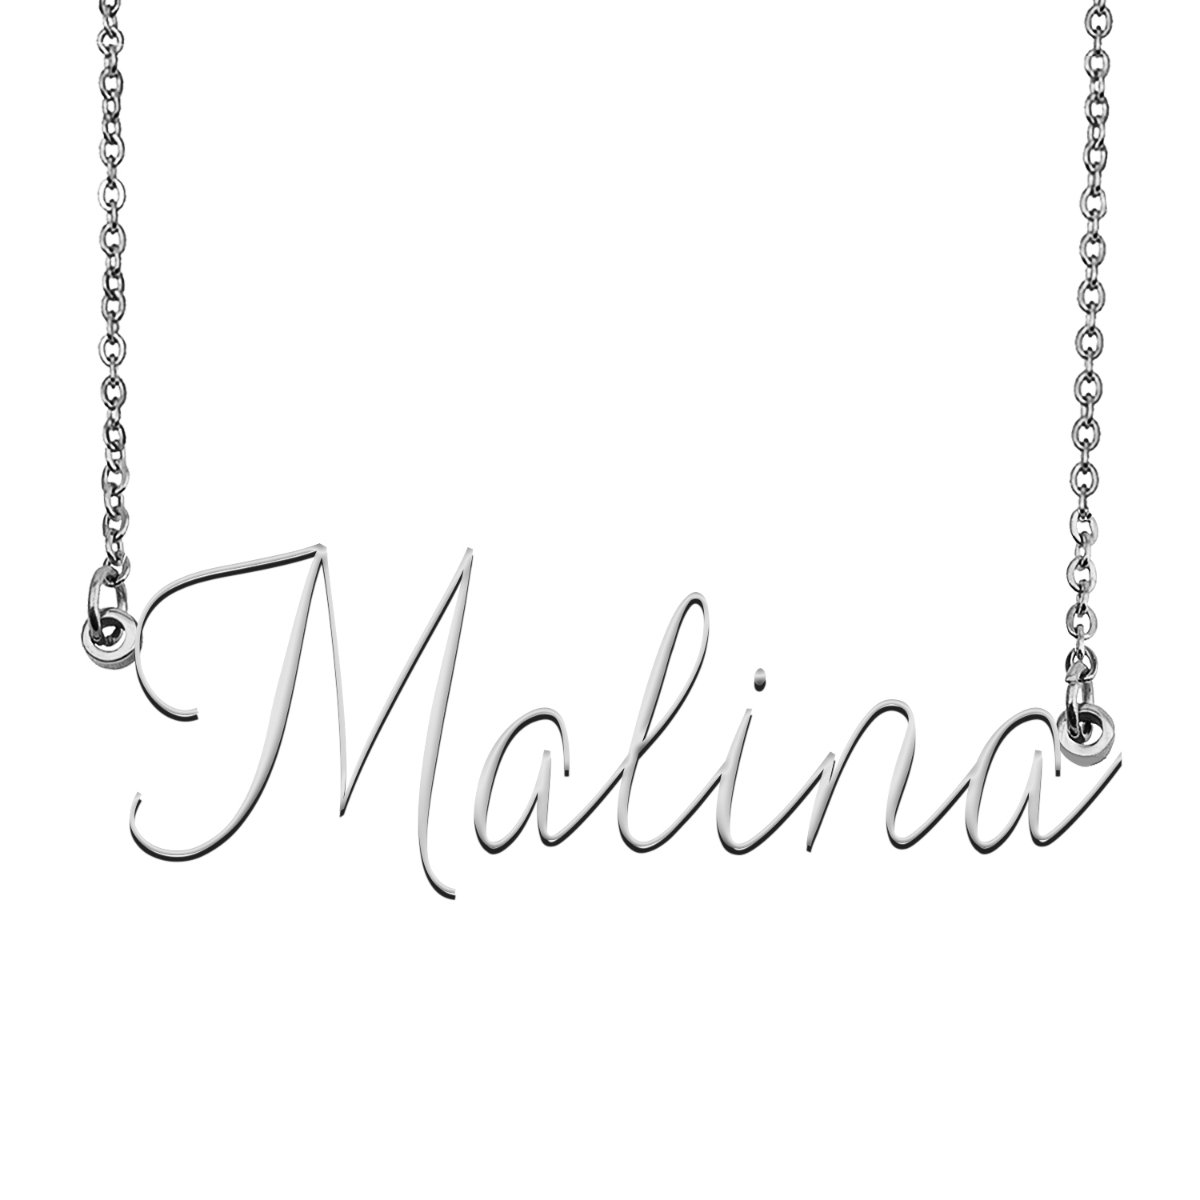 malina name meaning